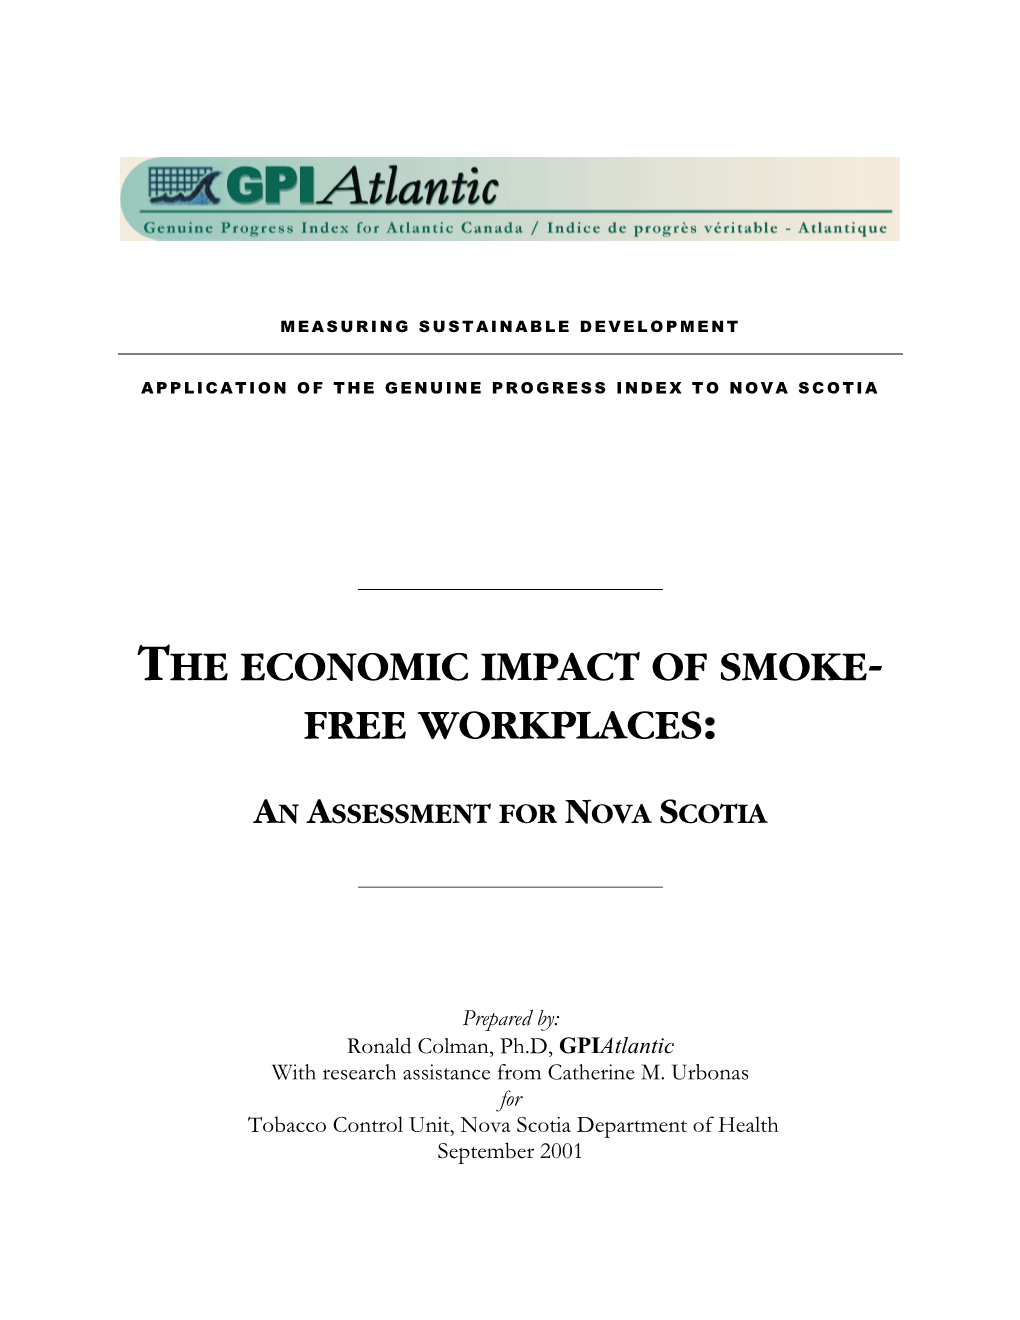 The Economic Impact of Smoke- Free Workplaces